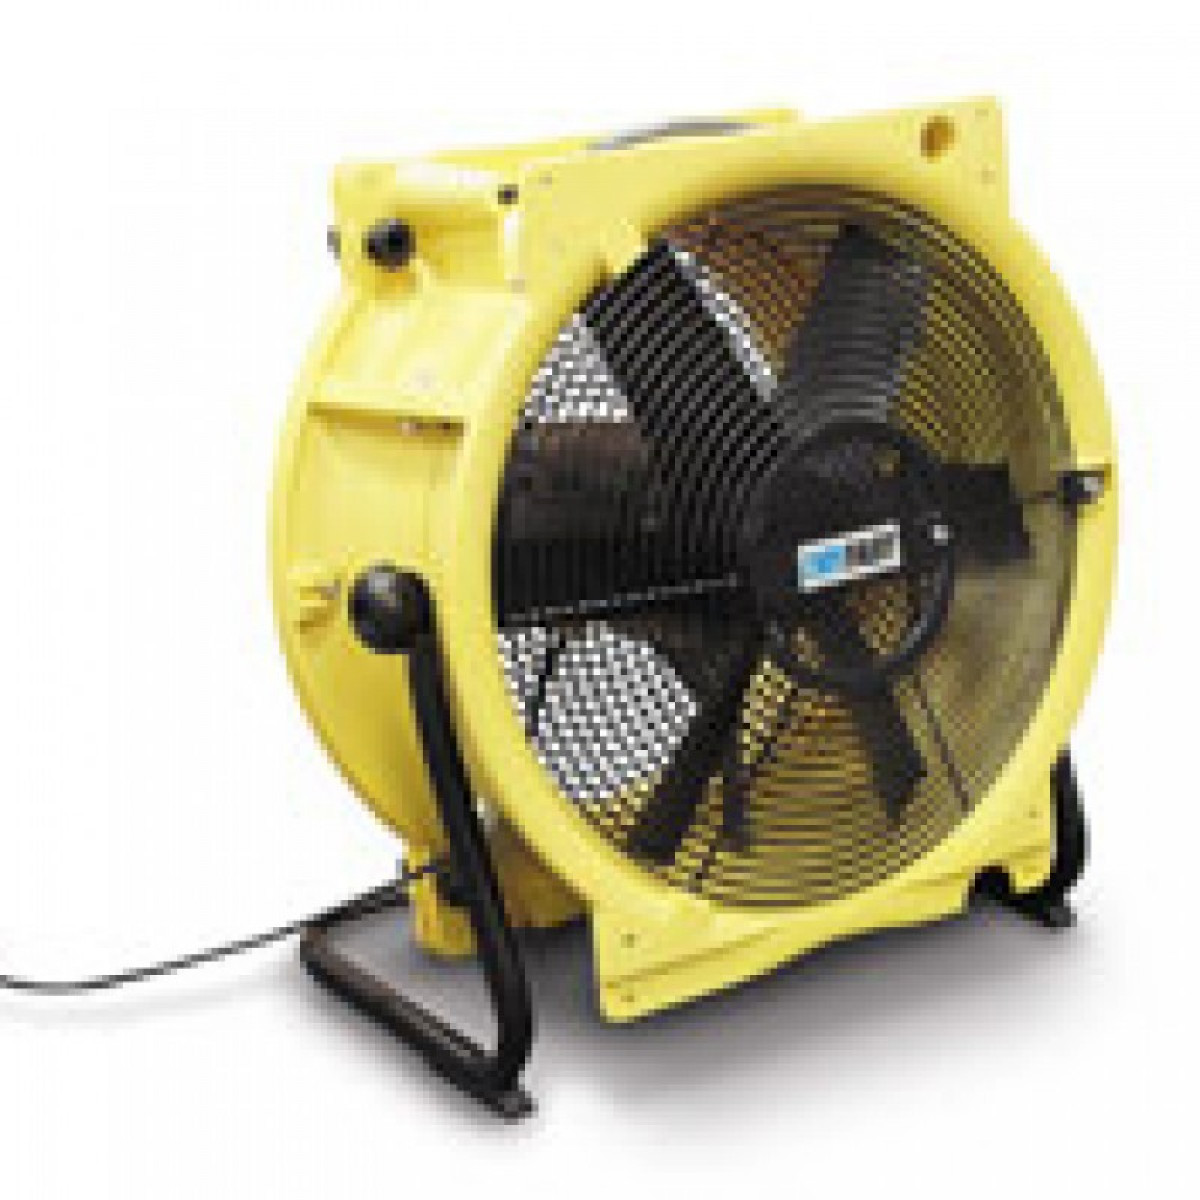 Axiaal ventilator TTV 4500